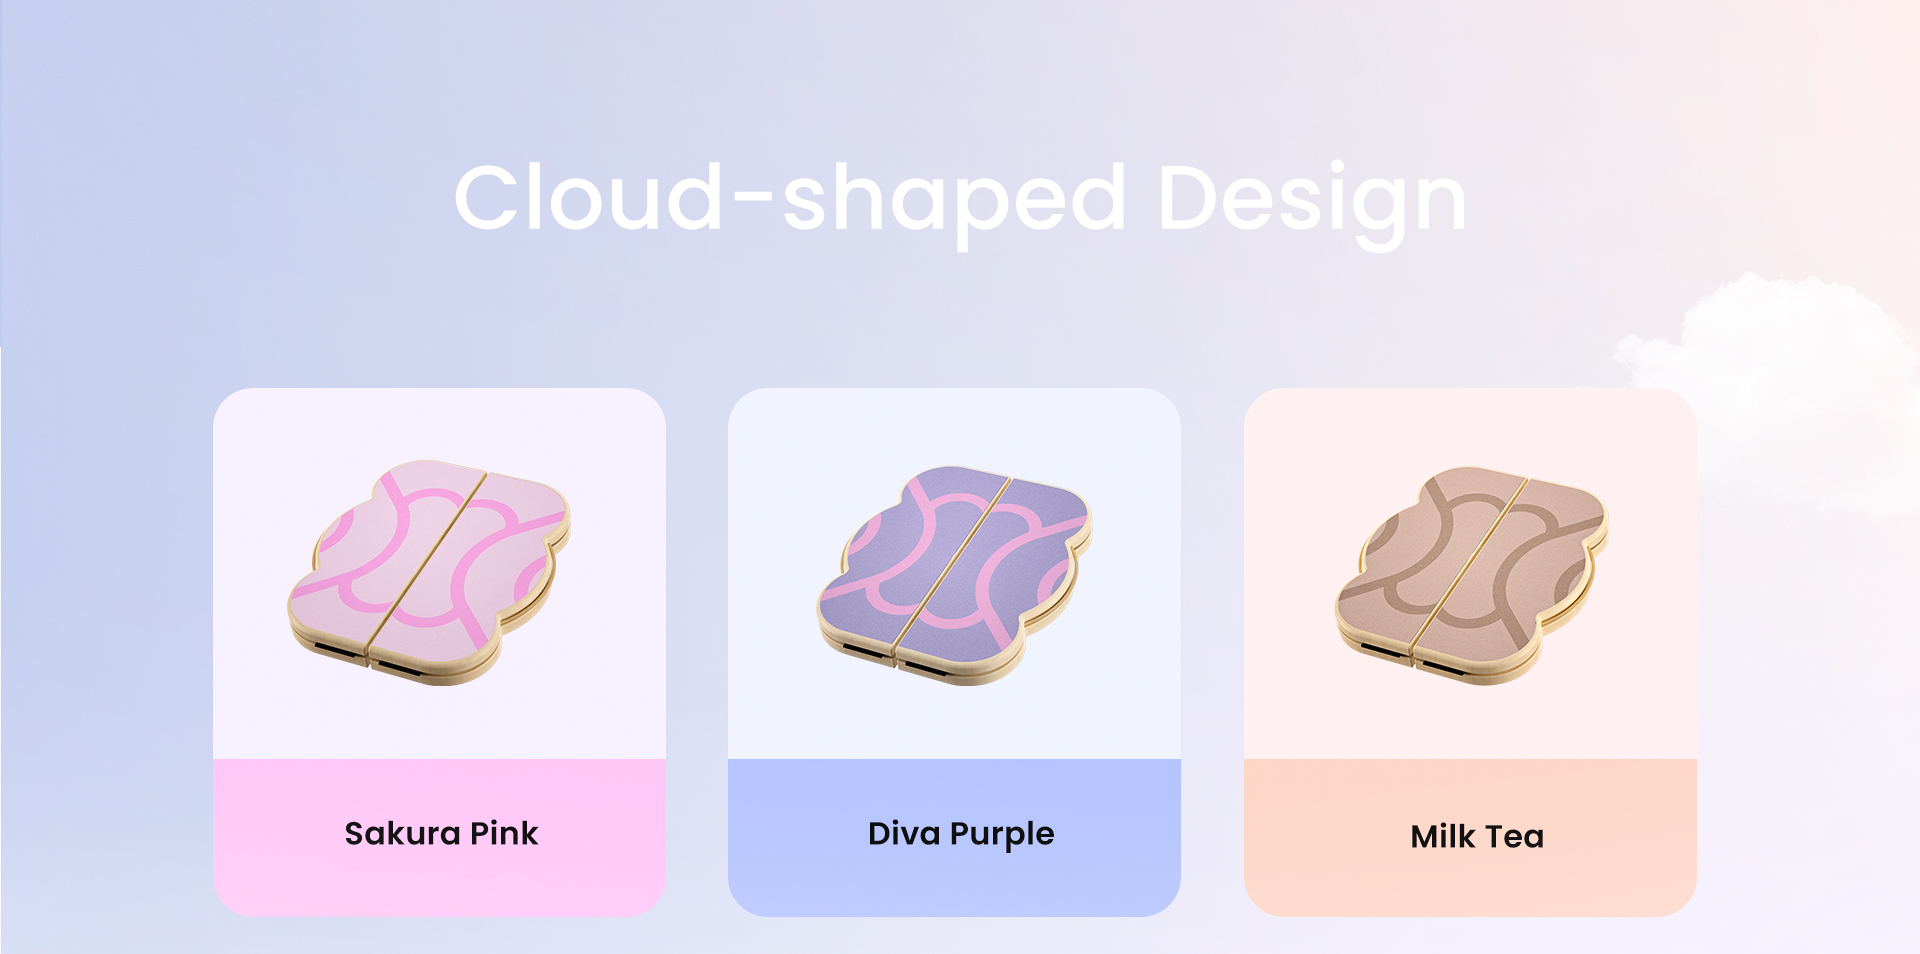 Cloud-shaped design